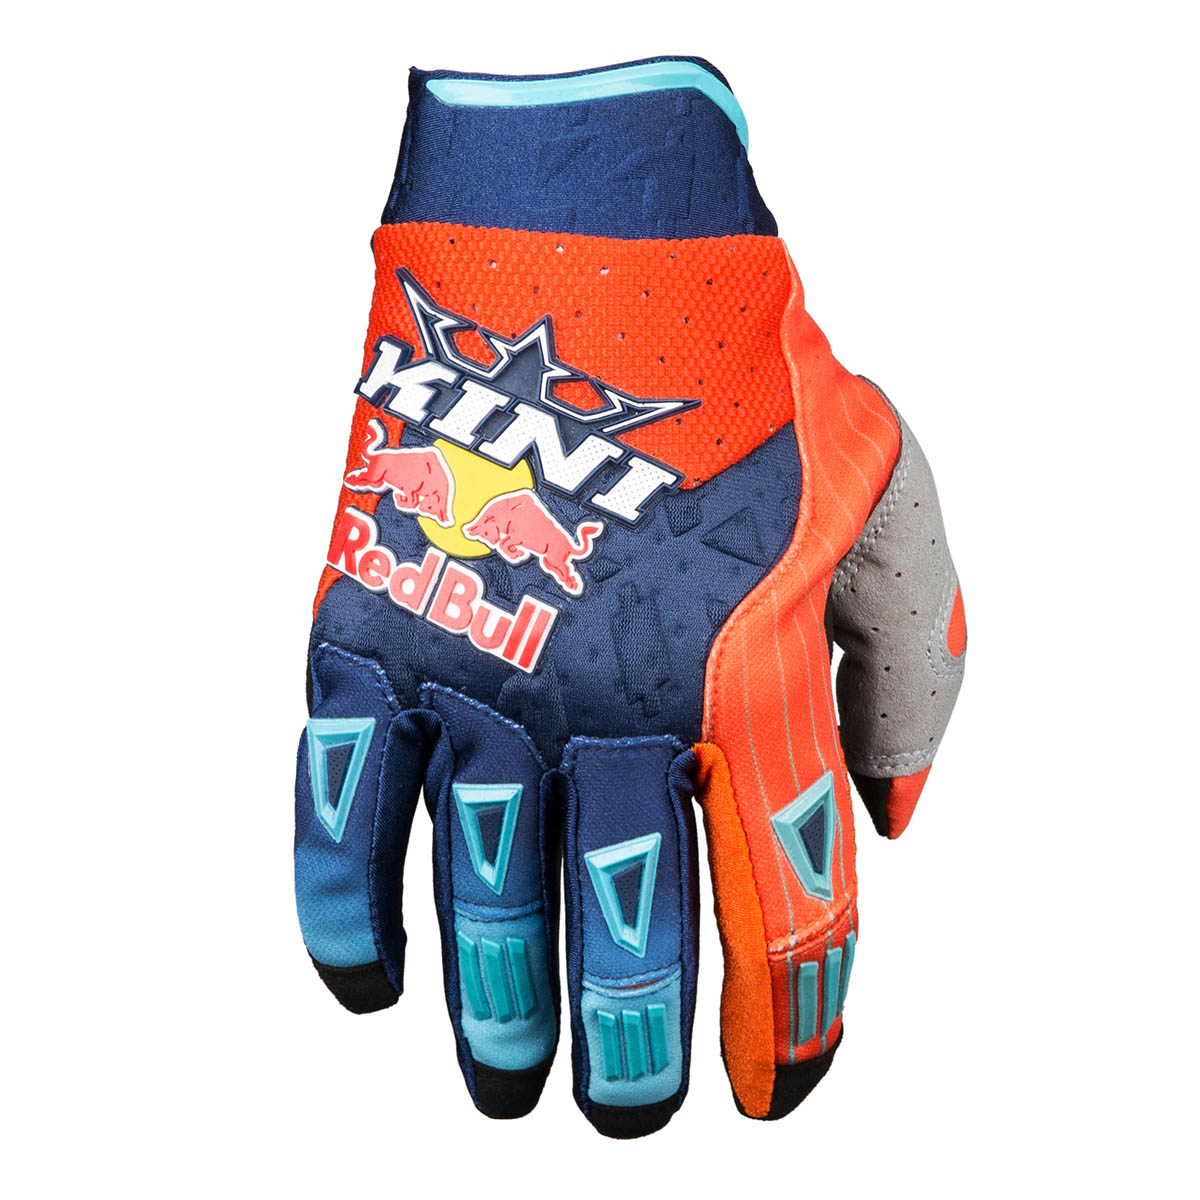 Kini Red Bull Gloves Competition Orange/White/Navy